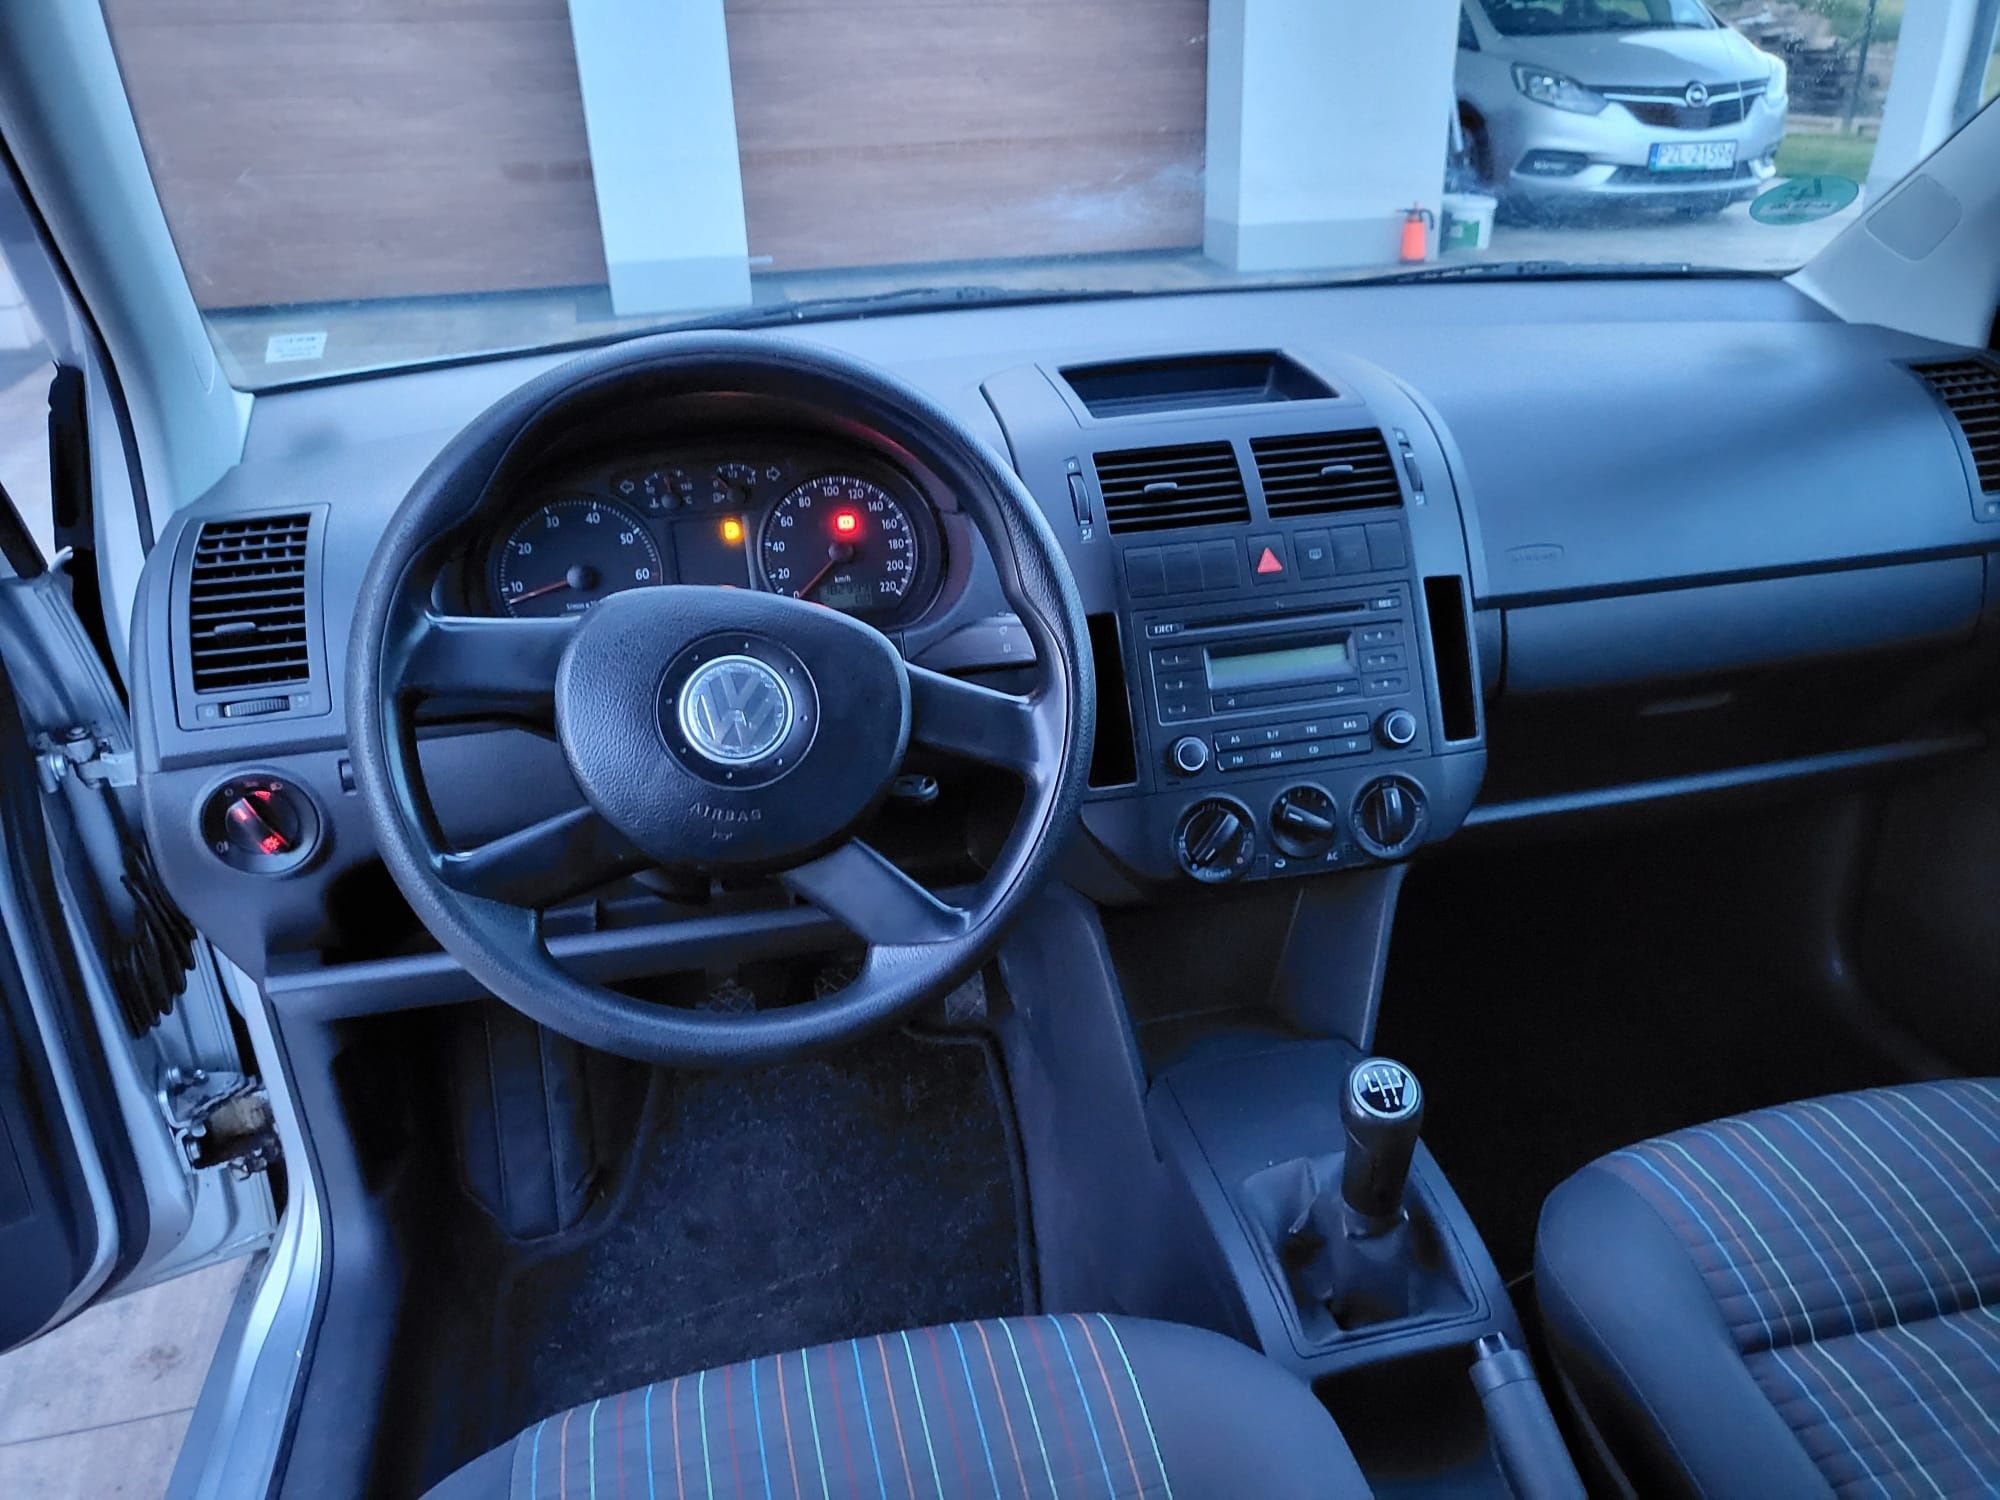 Volkswagen Polo 1.2 benzyna ,klima,abs